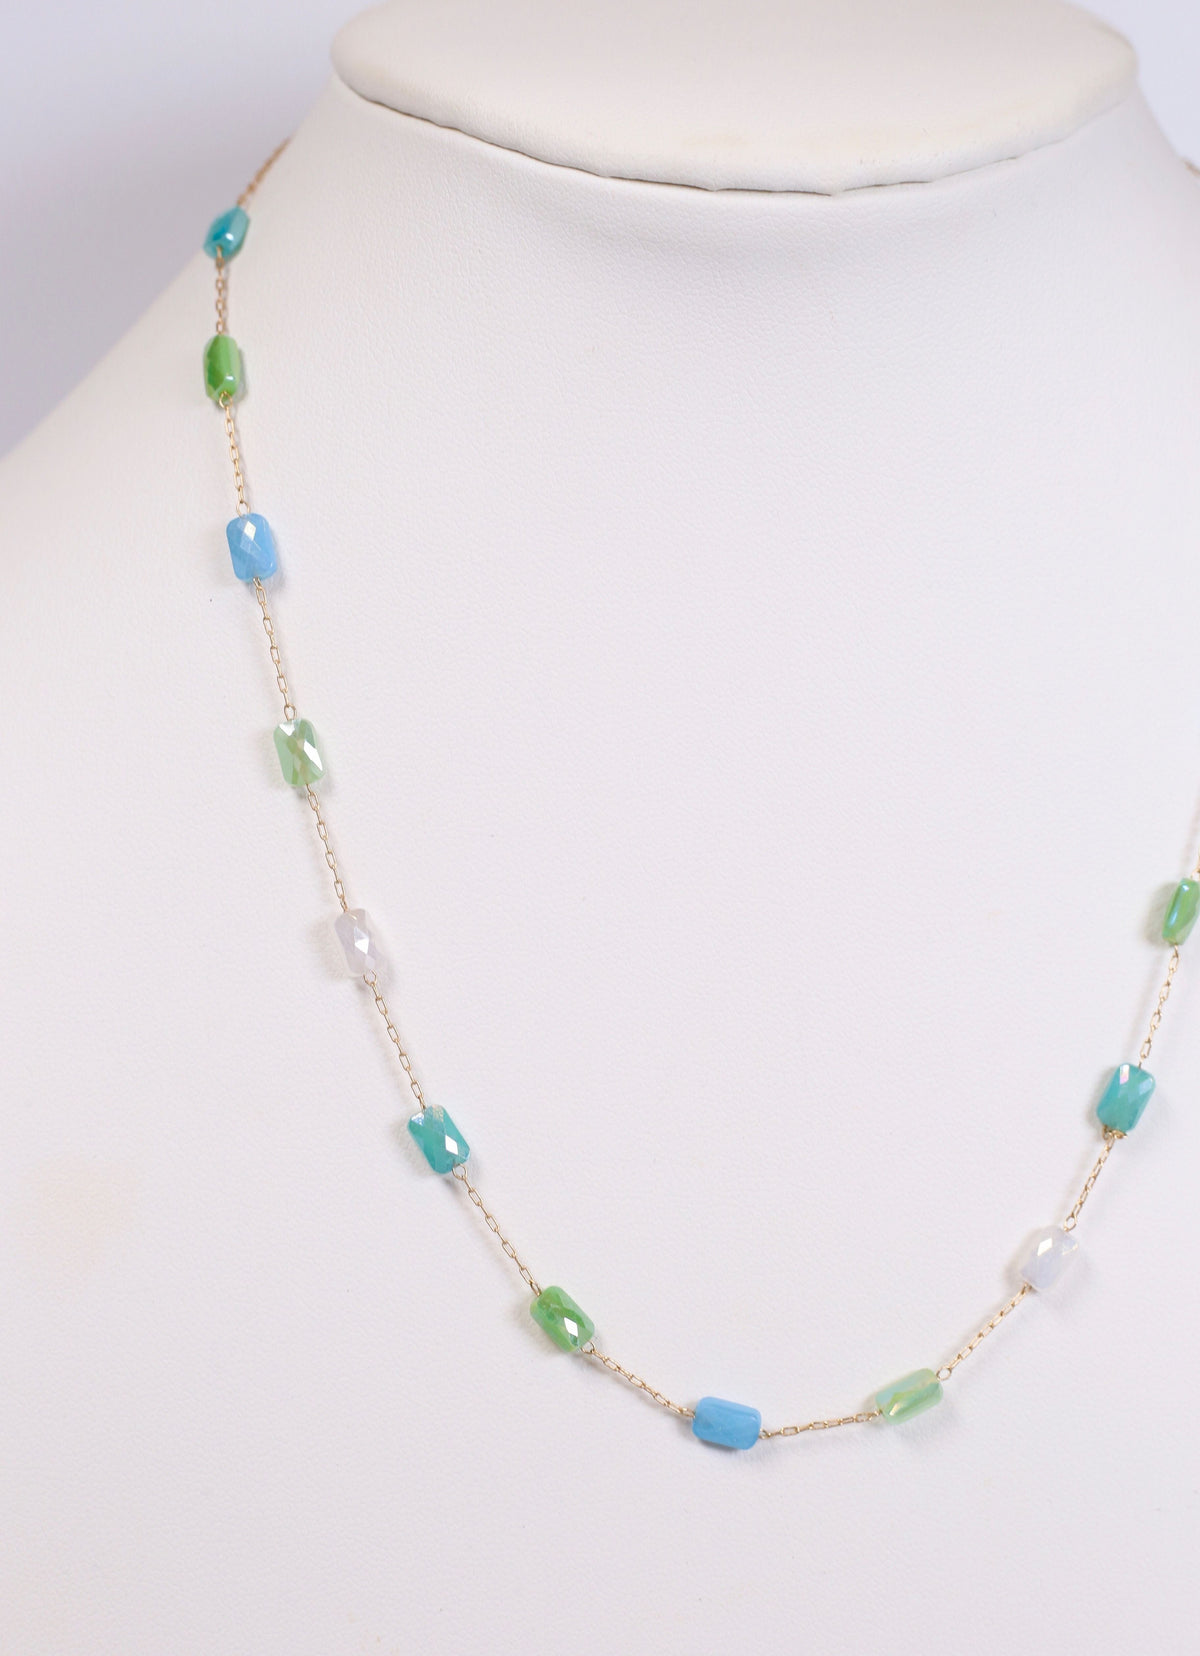 Fairway Glass Bead Necklace BLUE MULTI - Caroline Hill